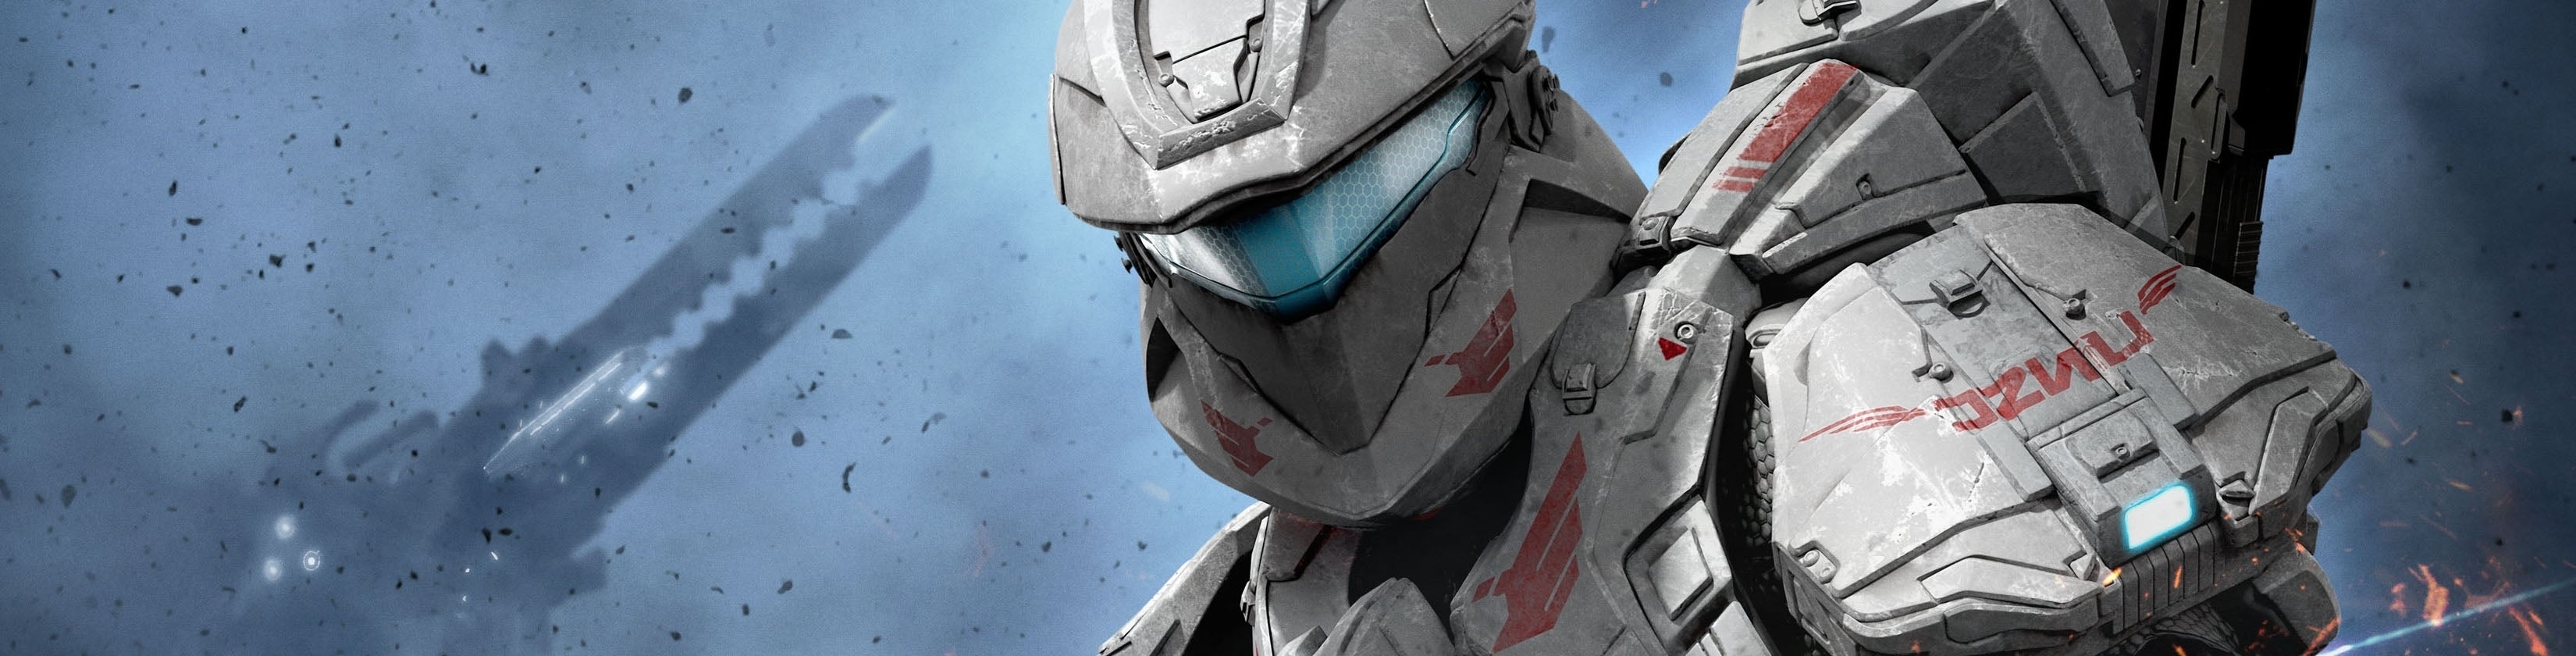 Immagine di Halo: Spartan Assault - review